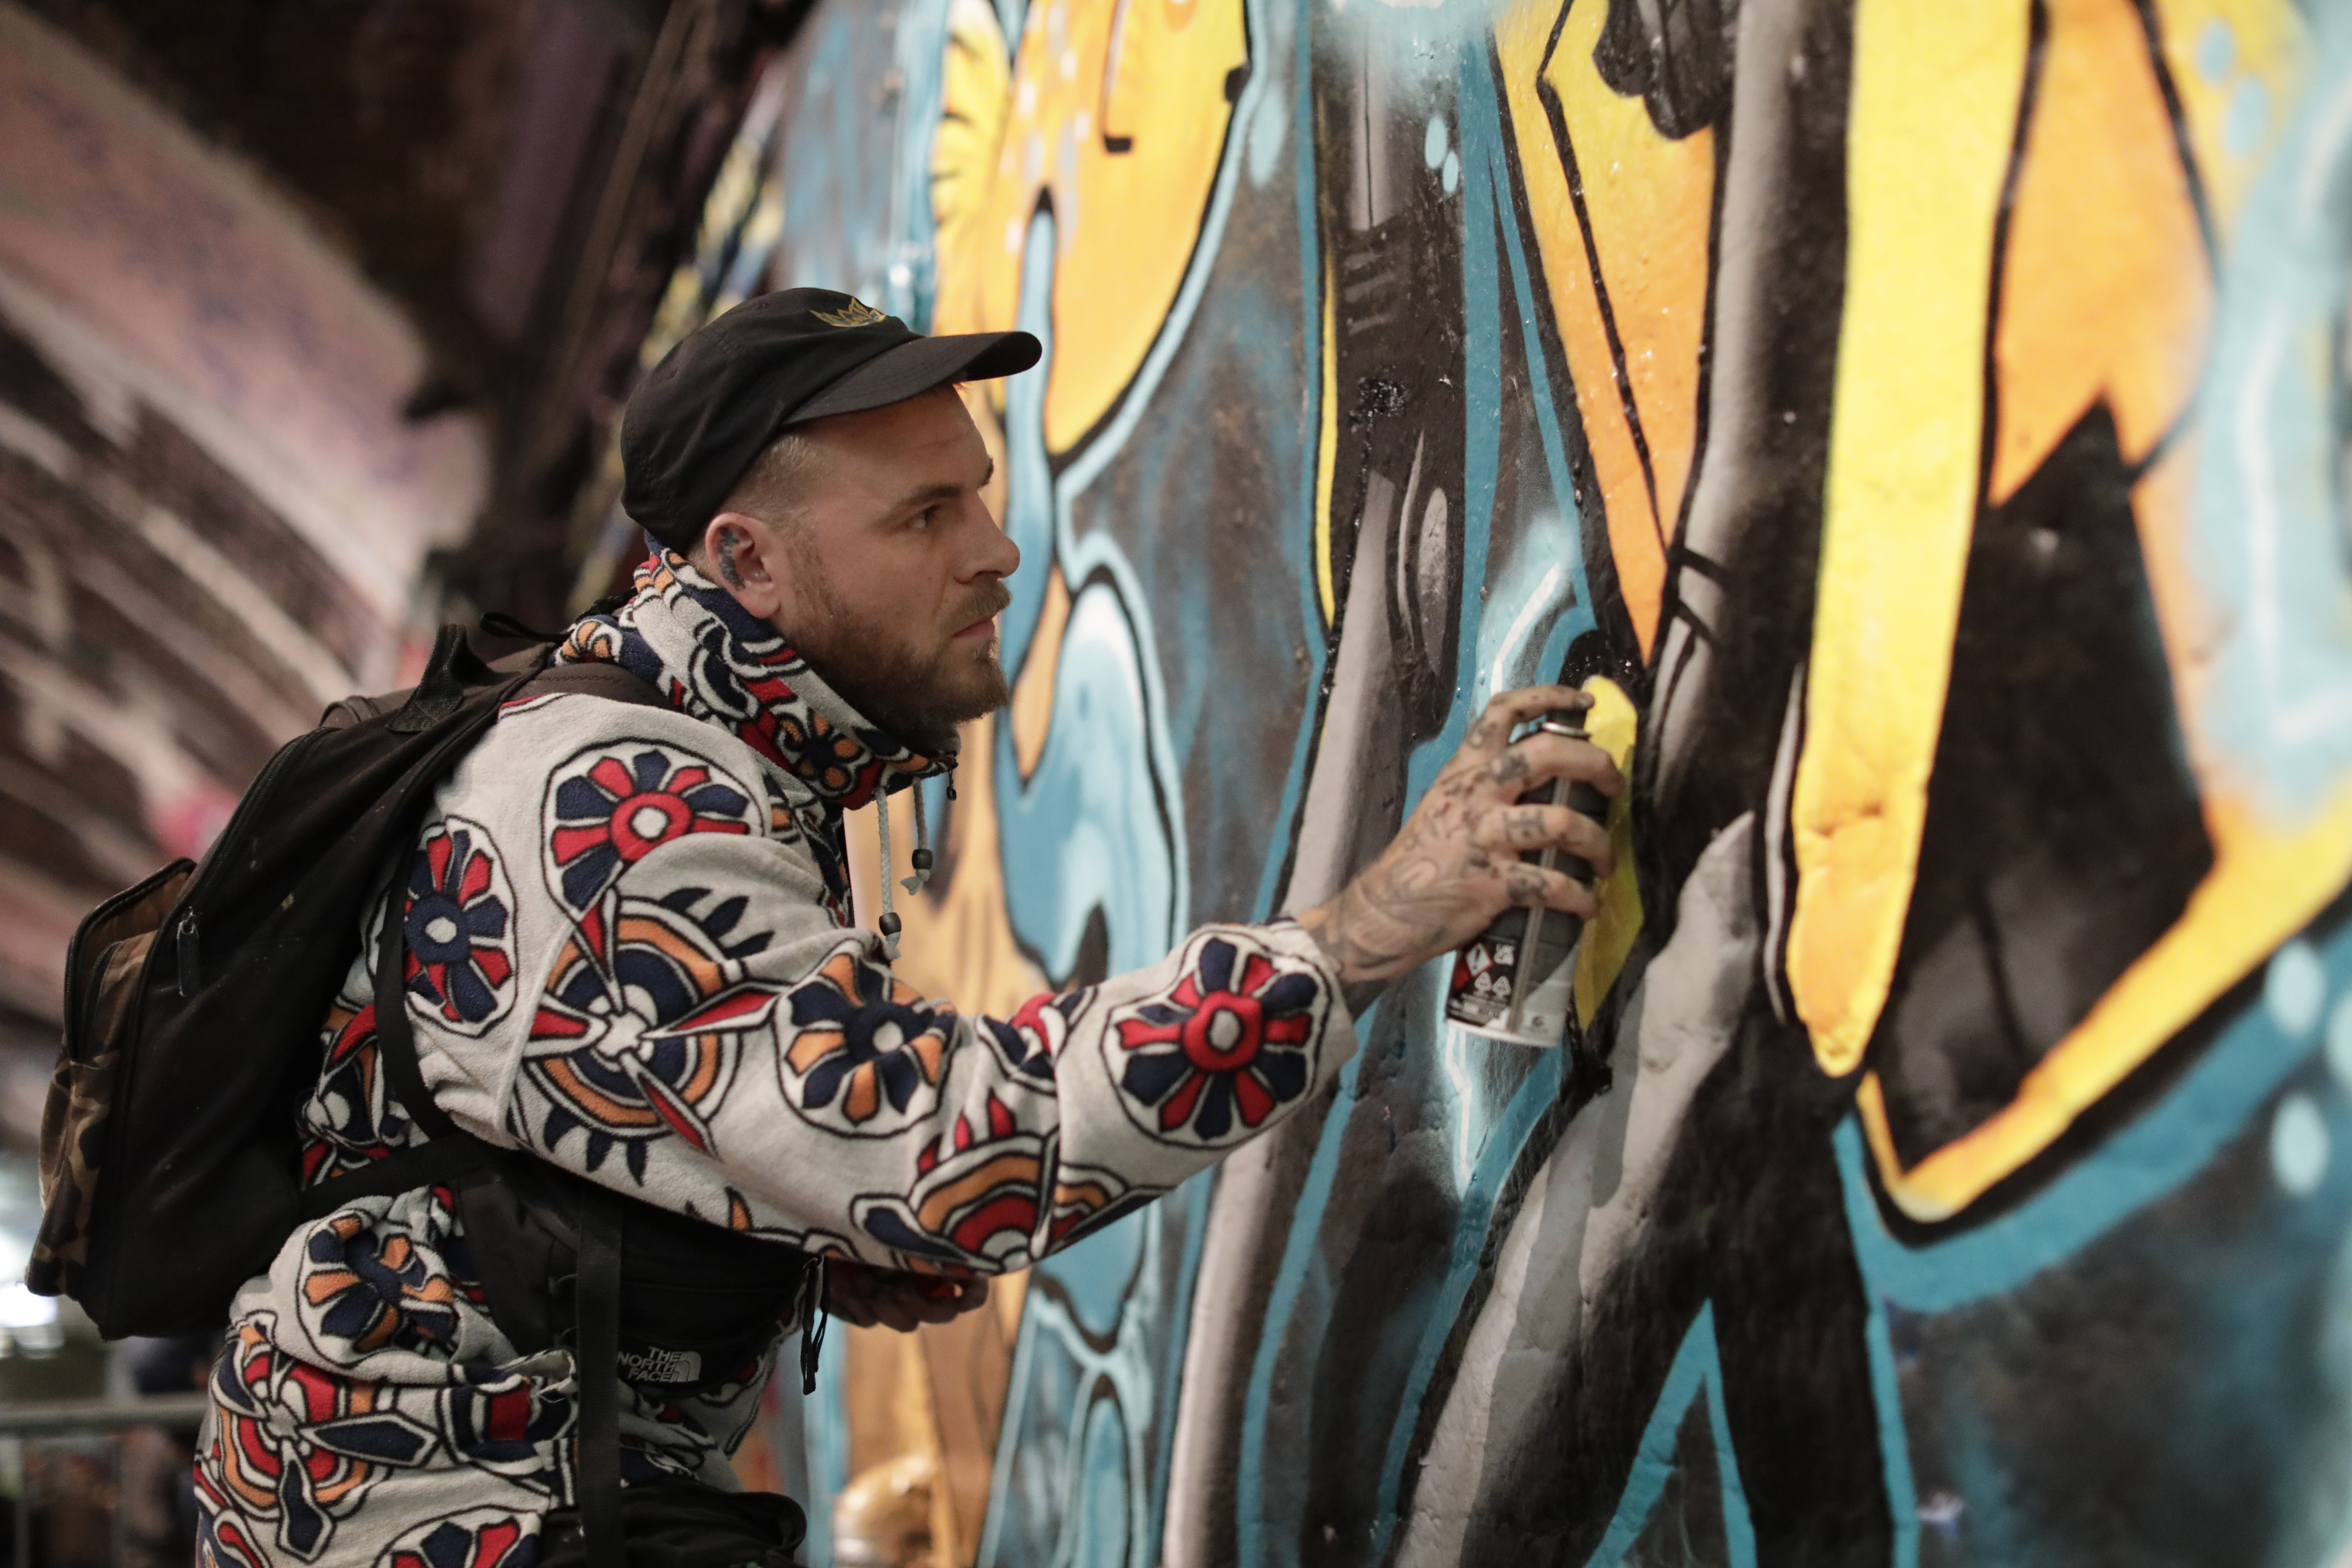 Graffiti artist Caeman Smith creates an engineering inspired artwork in the Leake Street tunnels